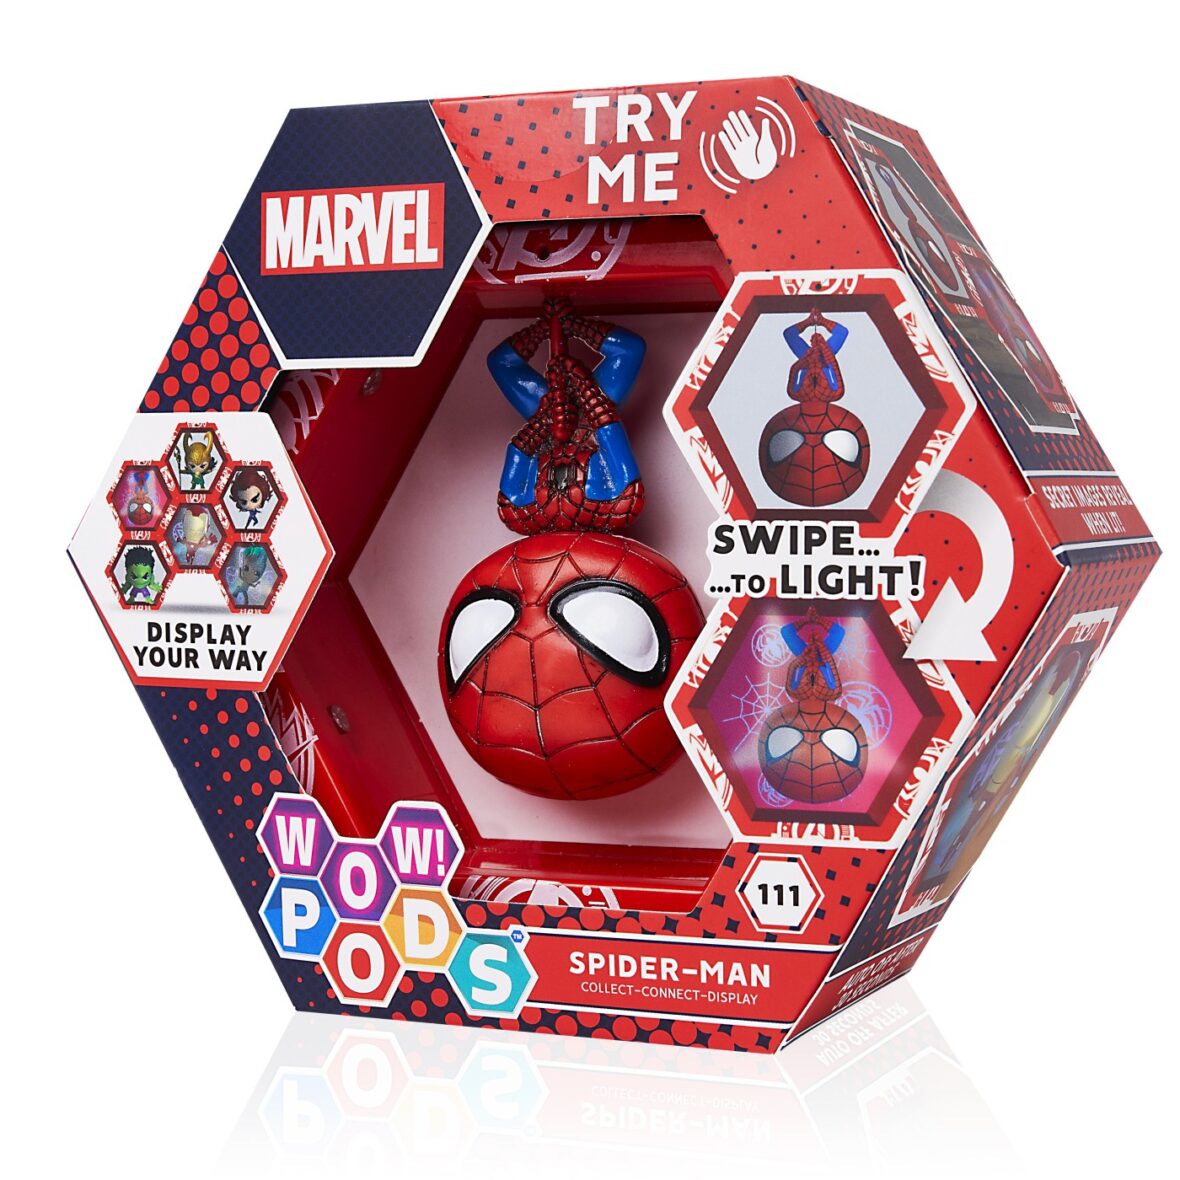 Wow! Pods – Marvel Spiderman